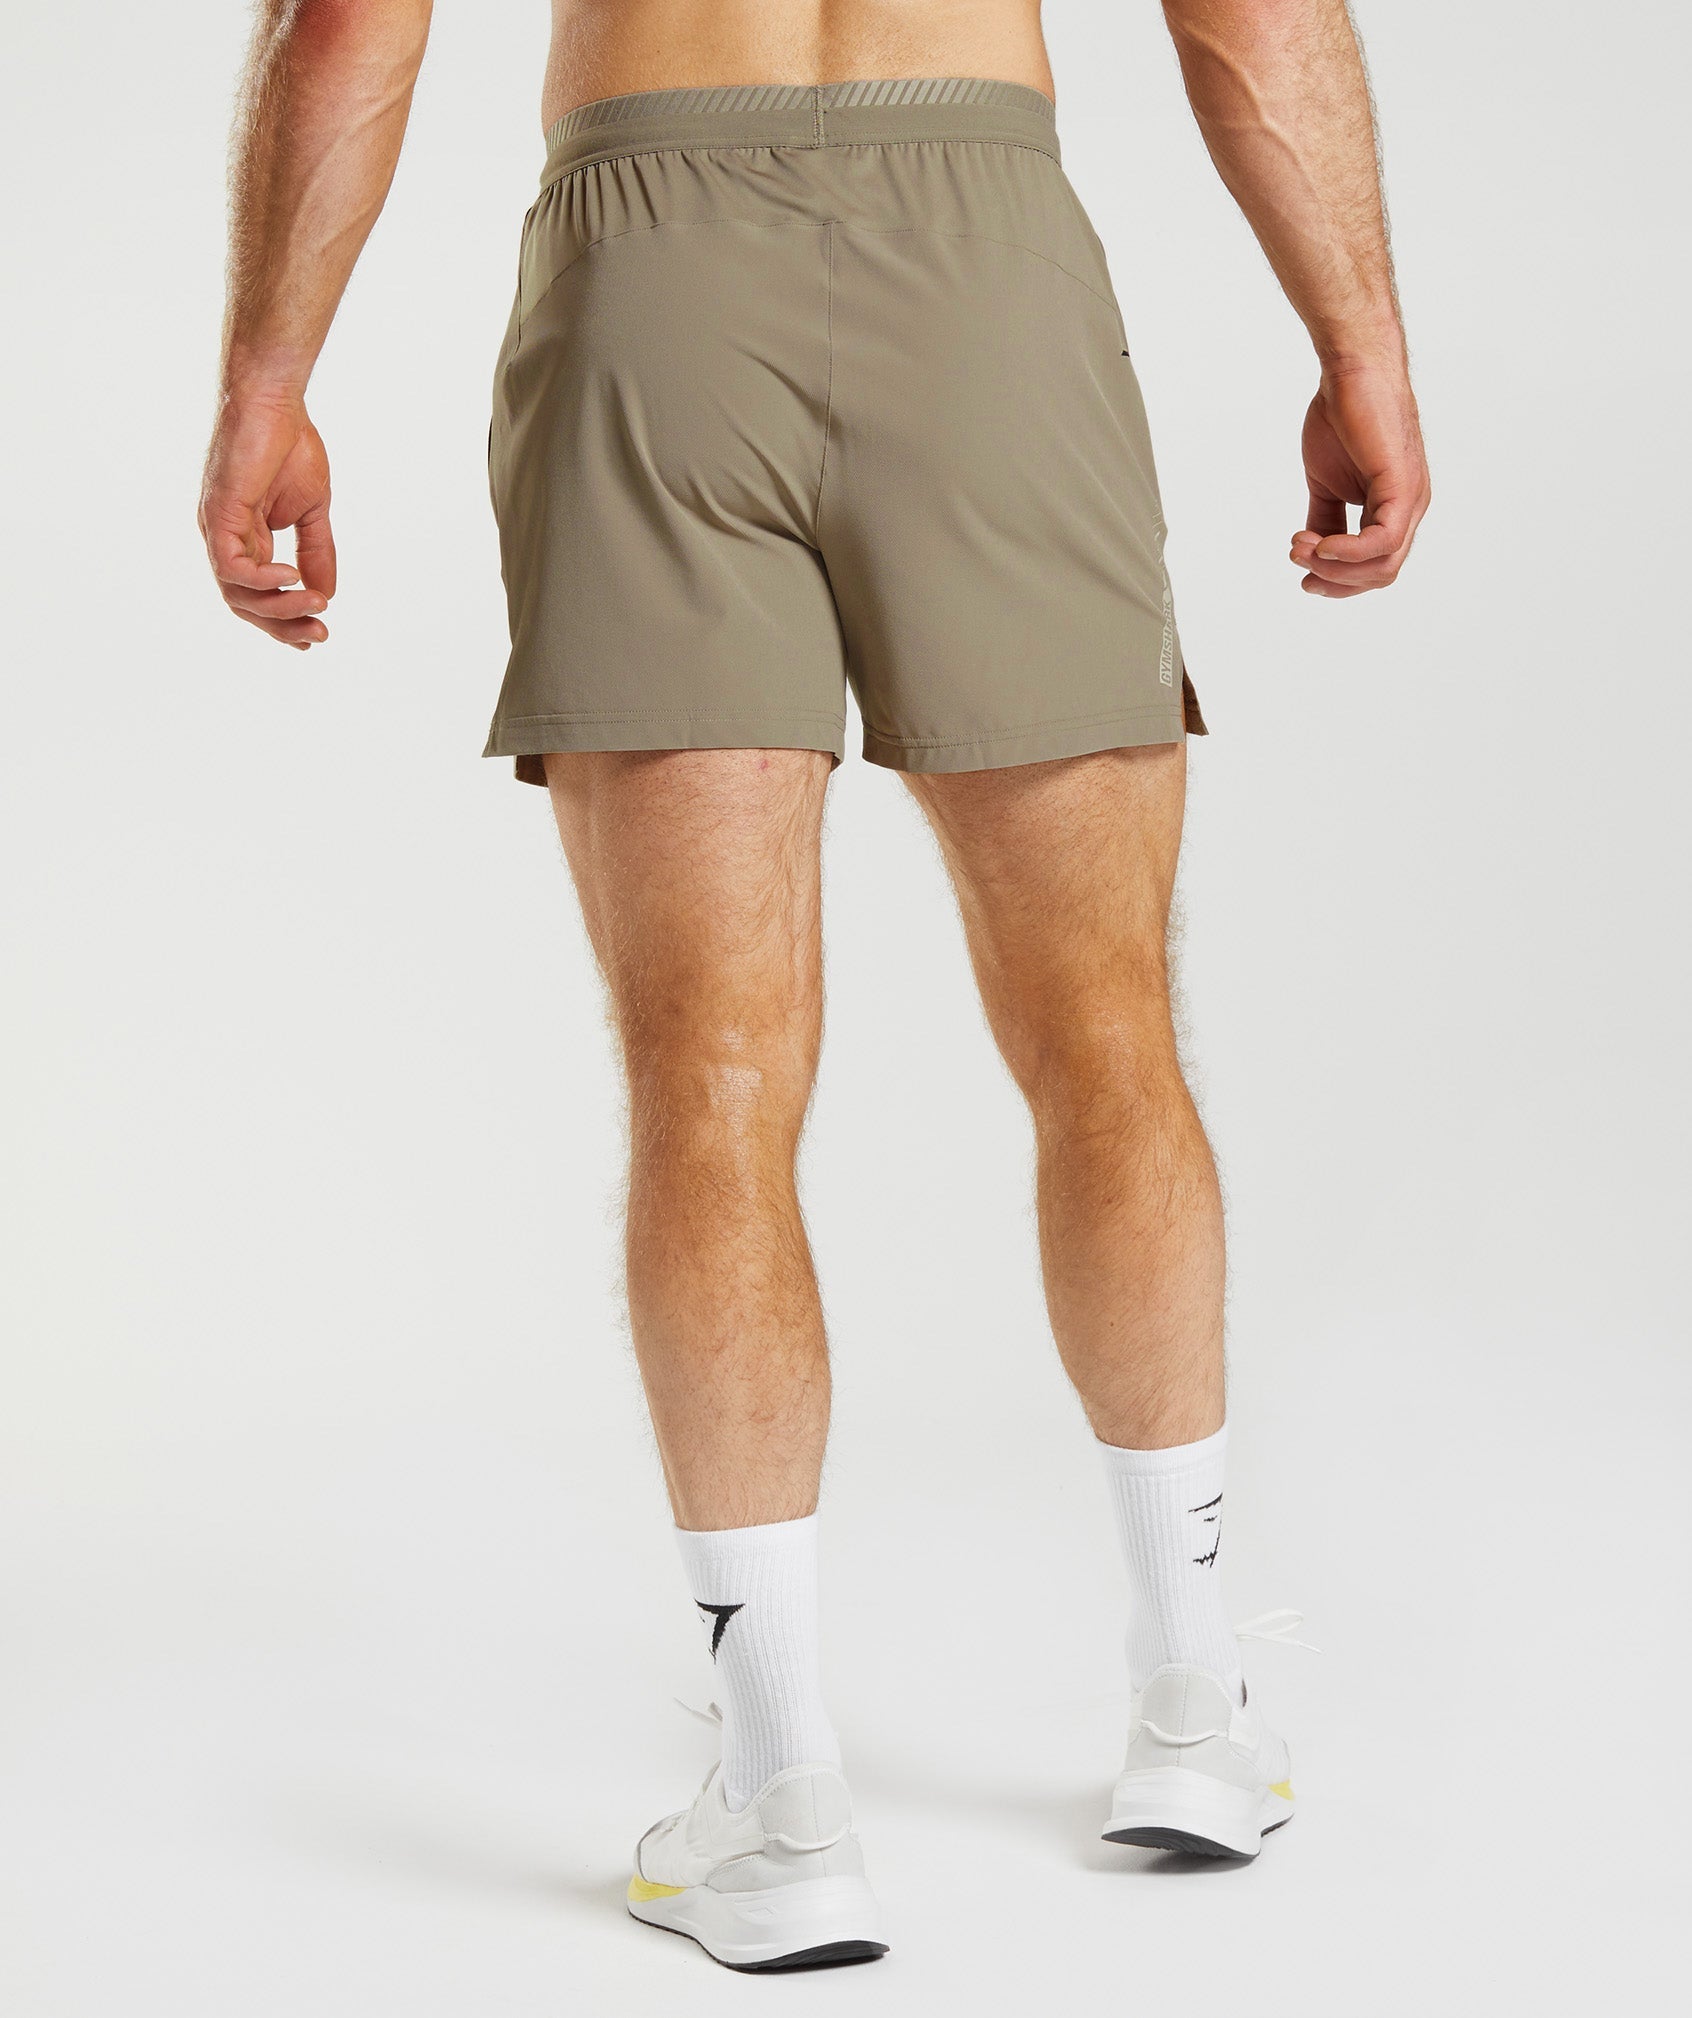 Apex 5" Hybrid Shorts in Earthy Brown